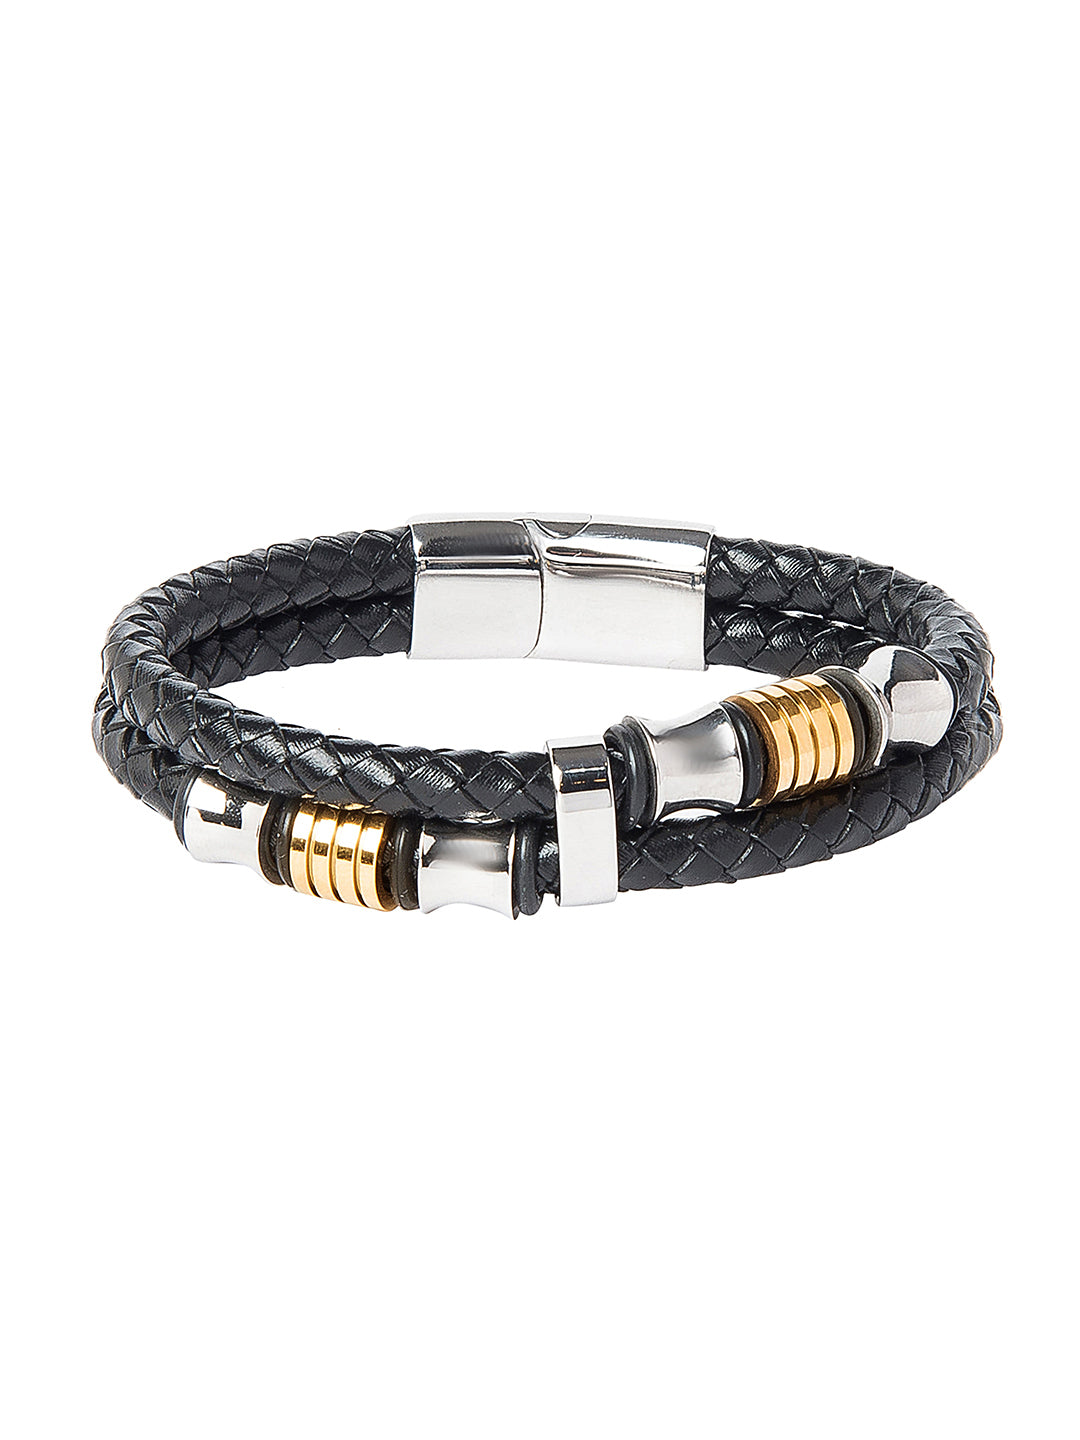 Custom Bracelet for Men in Stainless Steel and Black Leather | Bracelets  for men, Custom bracelets, Boy gifts boyfriends